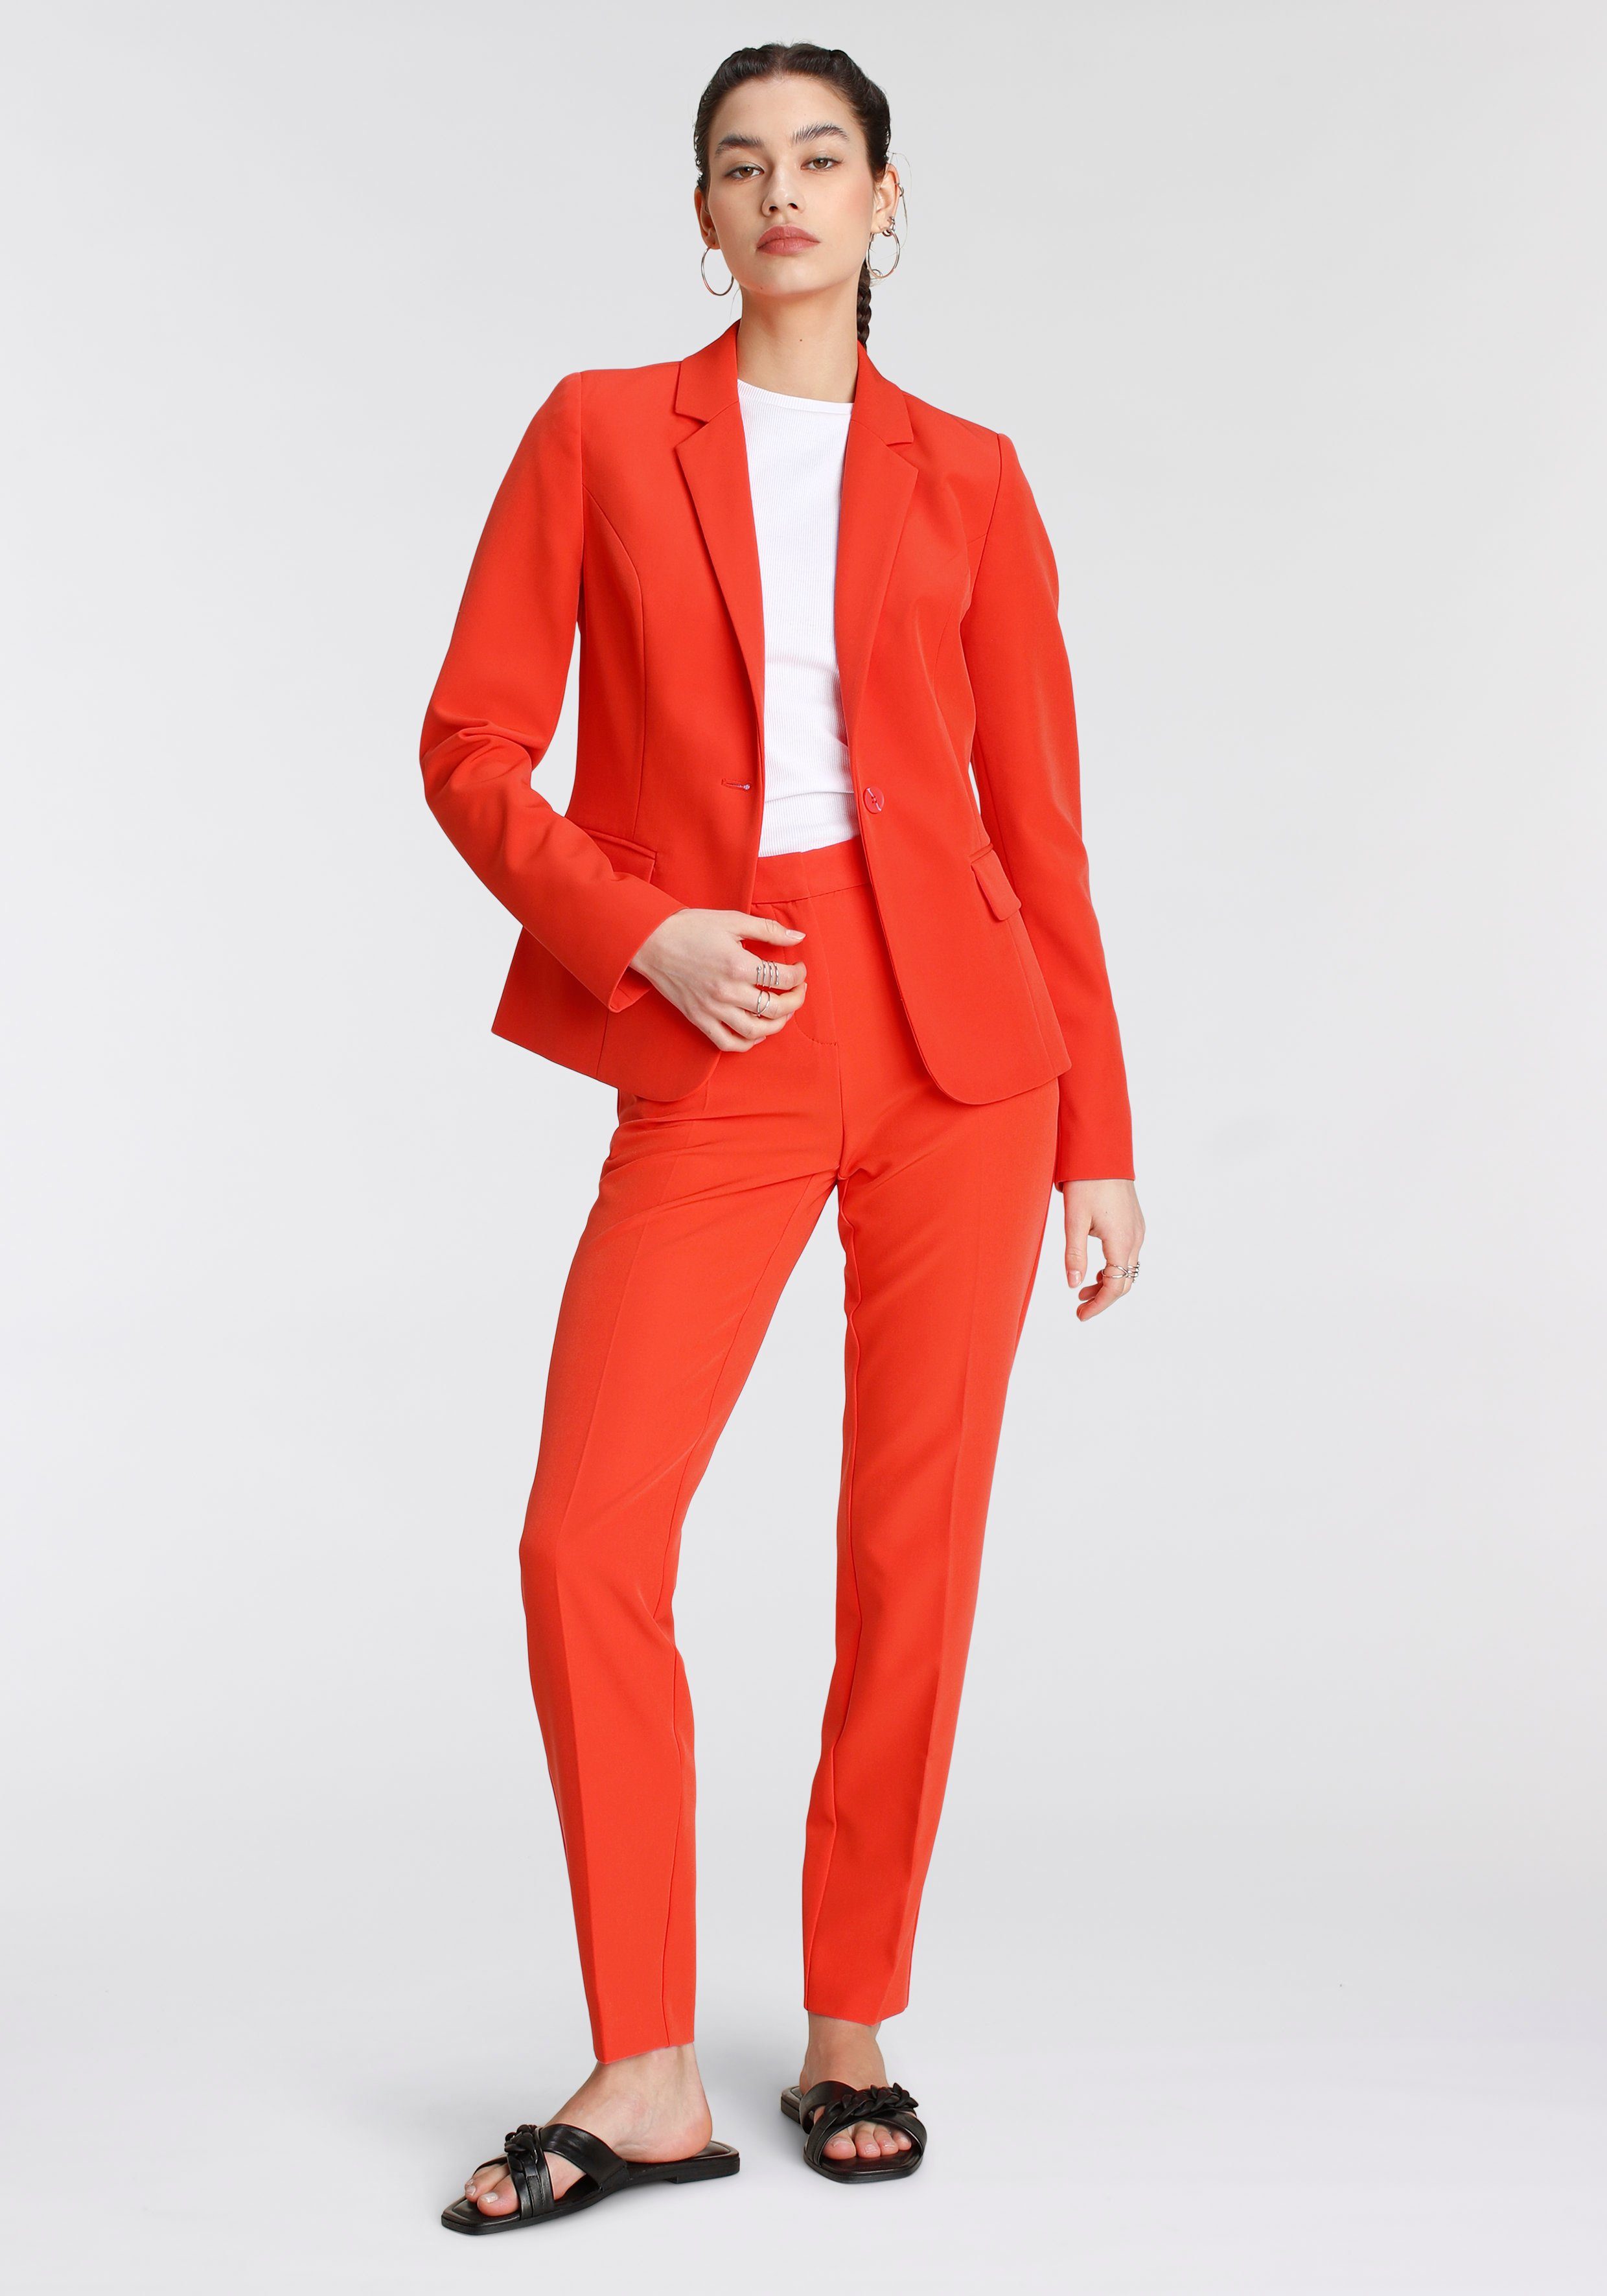 Tamaris Anzughose in Trendfarben orange (Hose nachhaltigem Material) aus